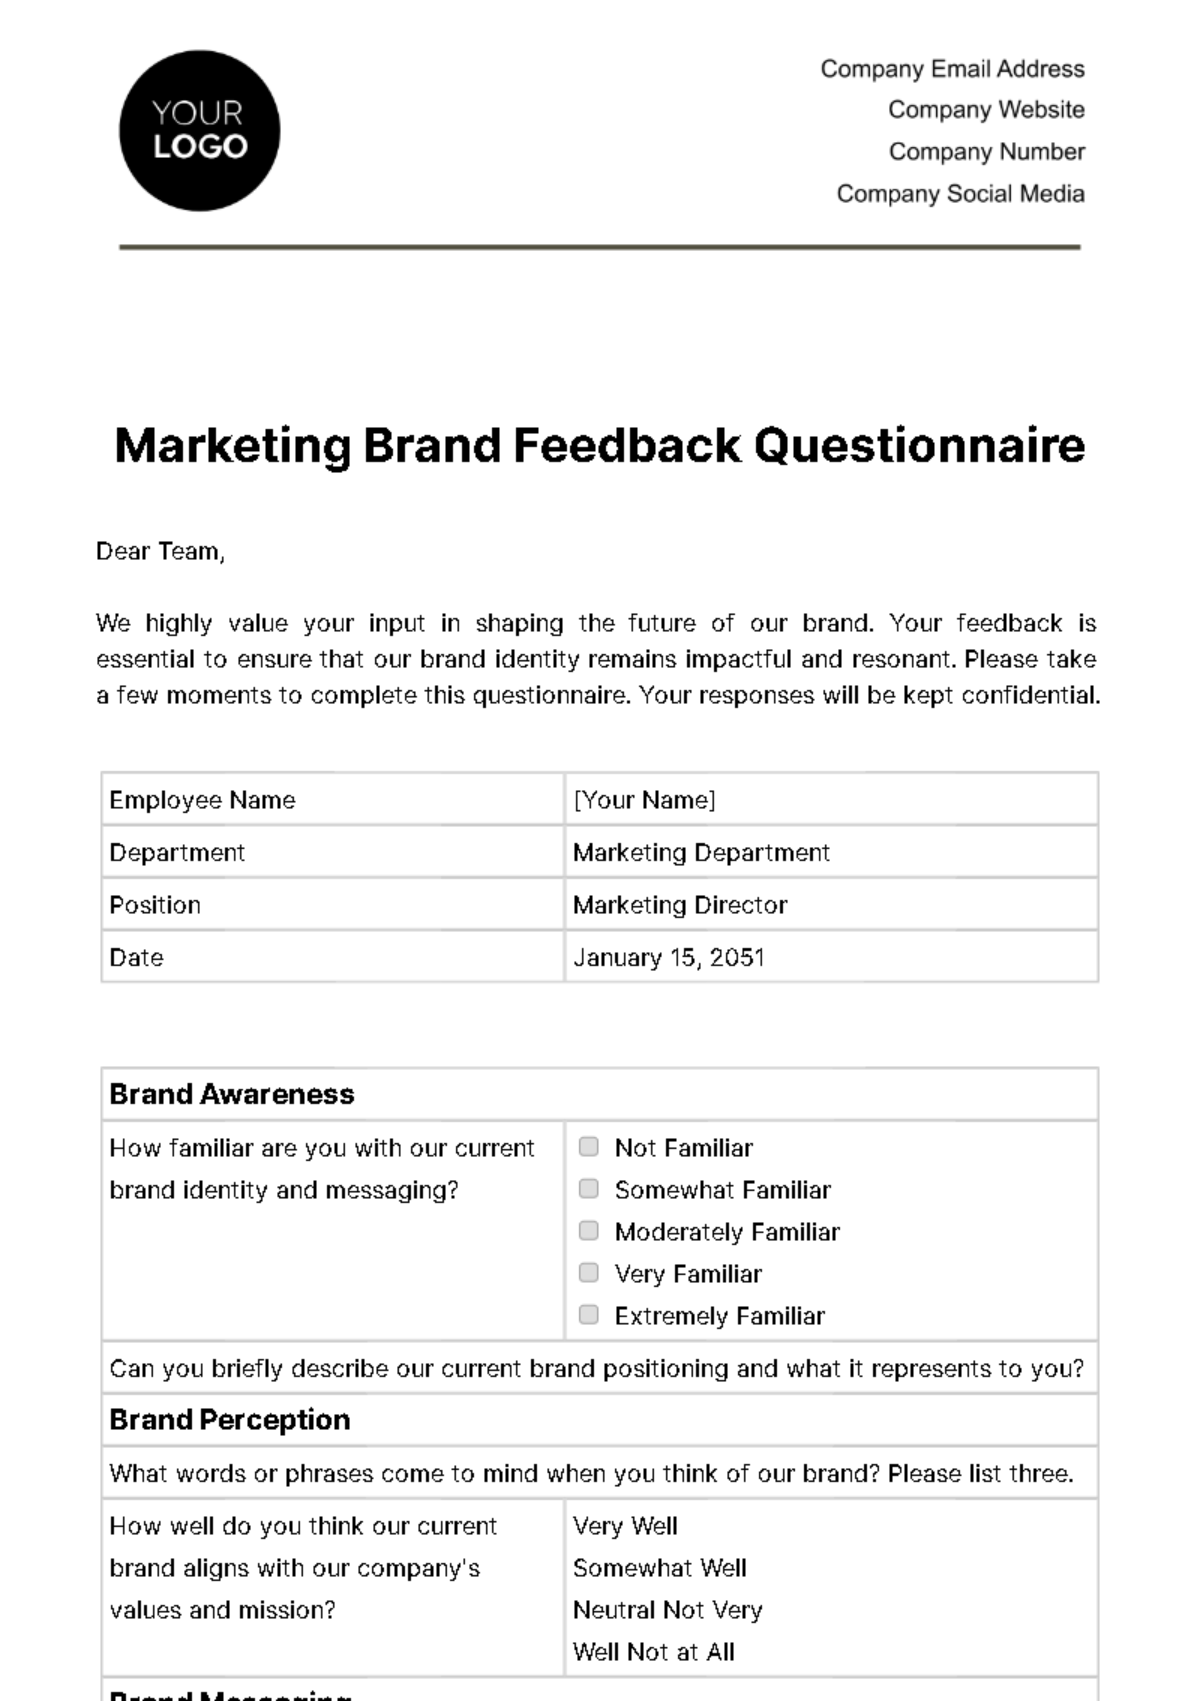 Marketing Brand Feedback Questionnaire Template